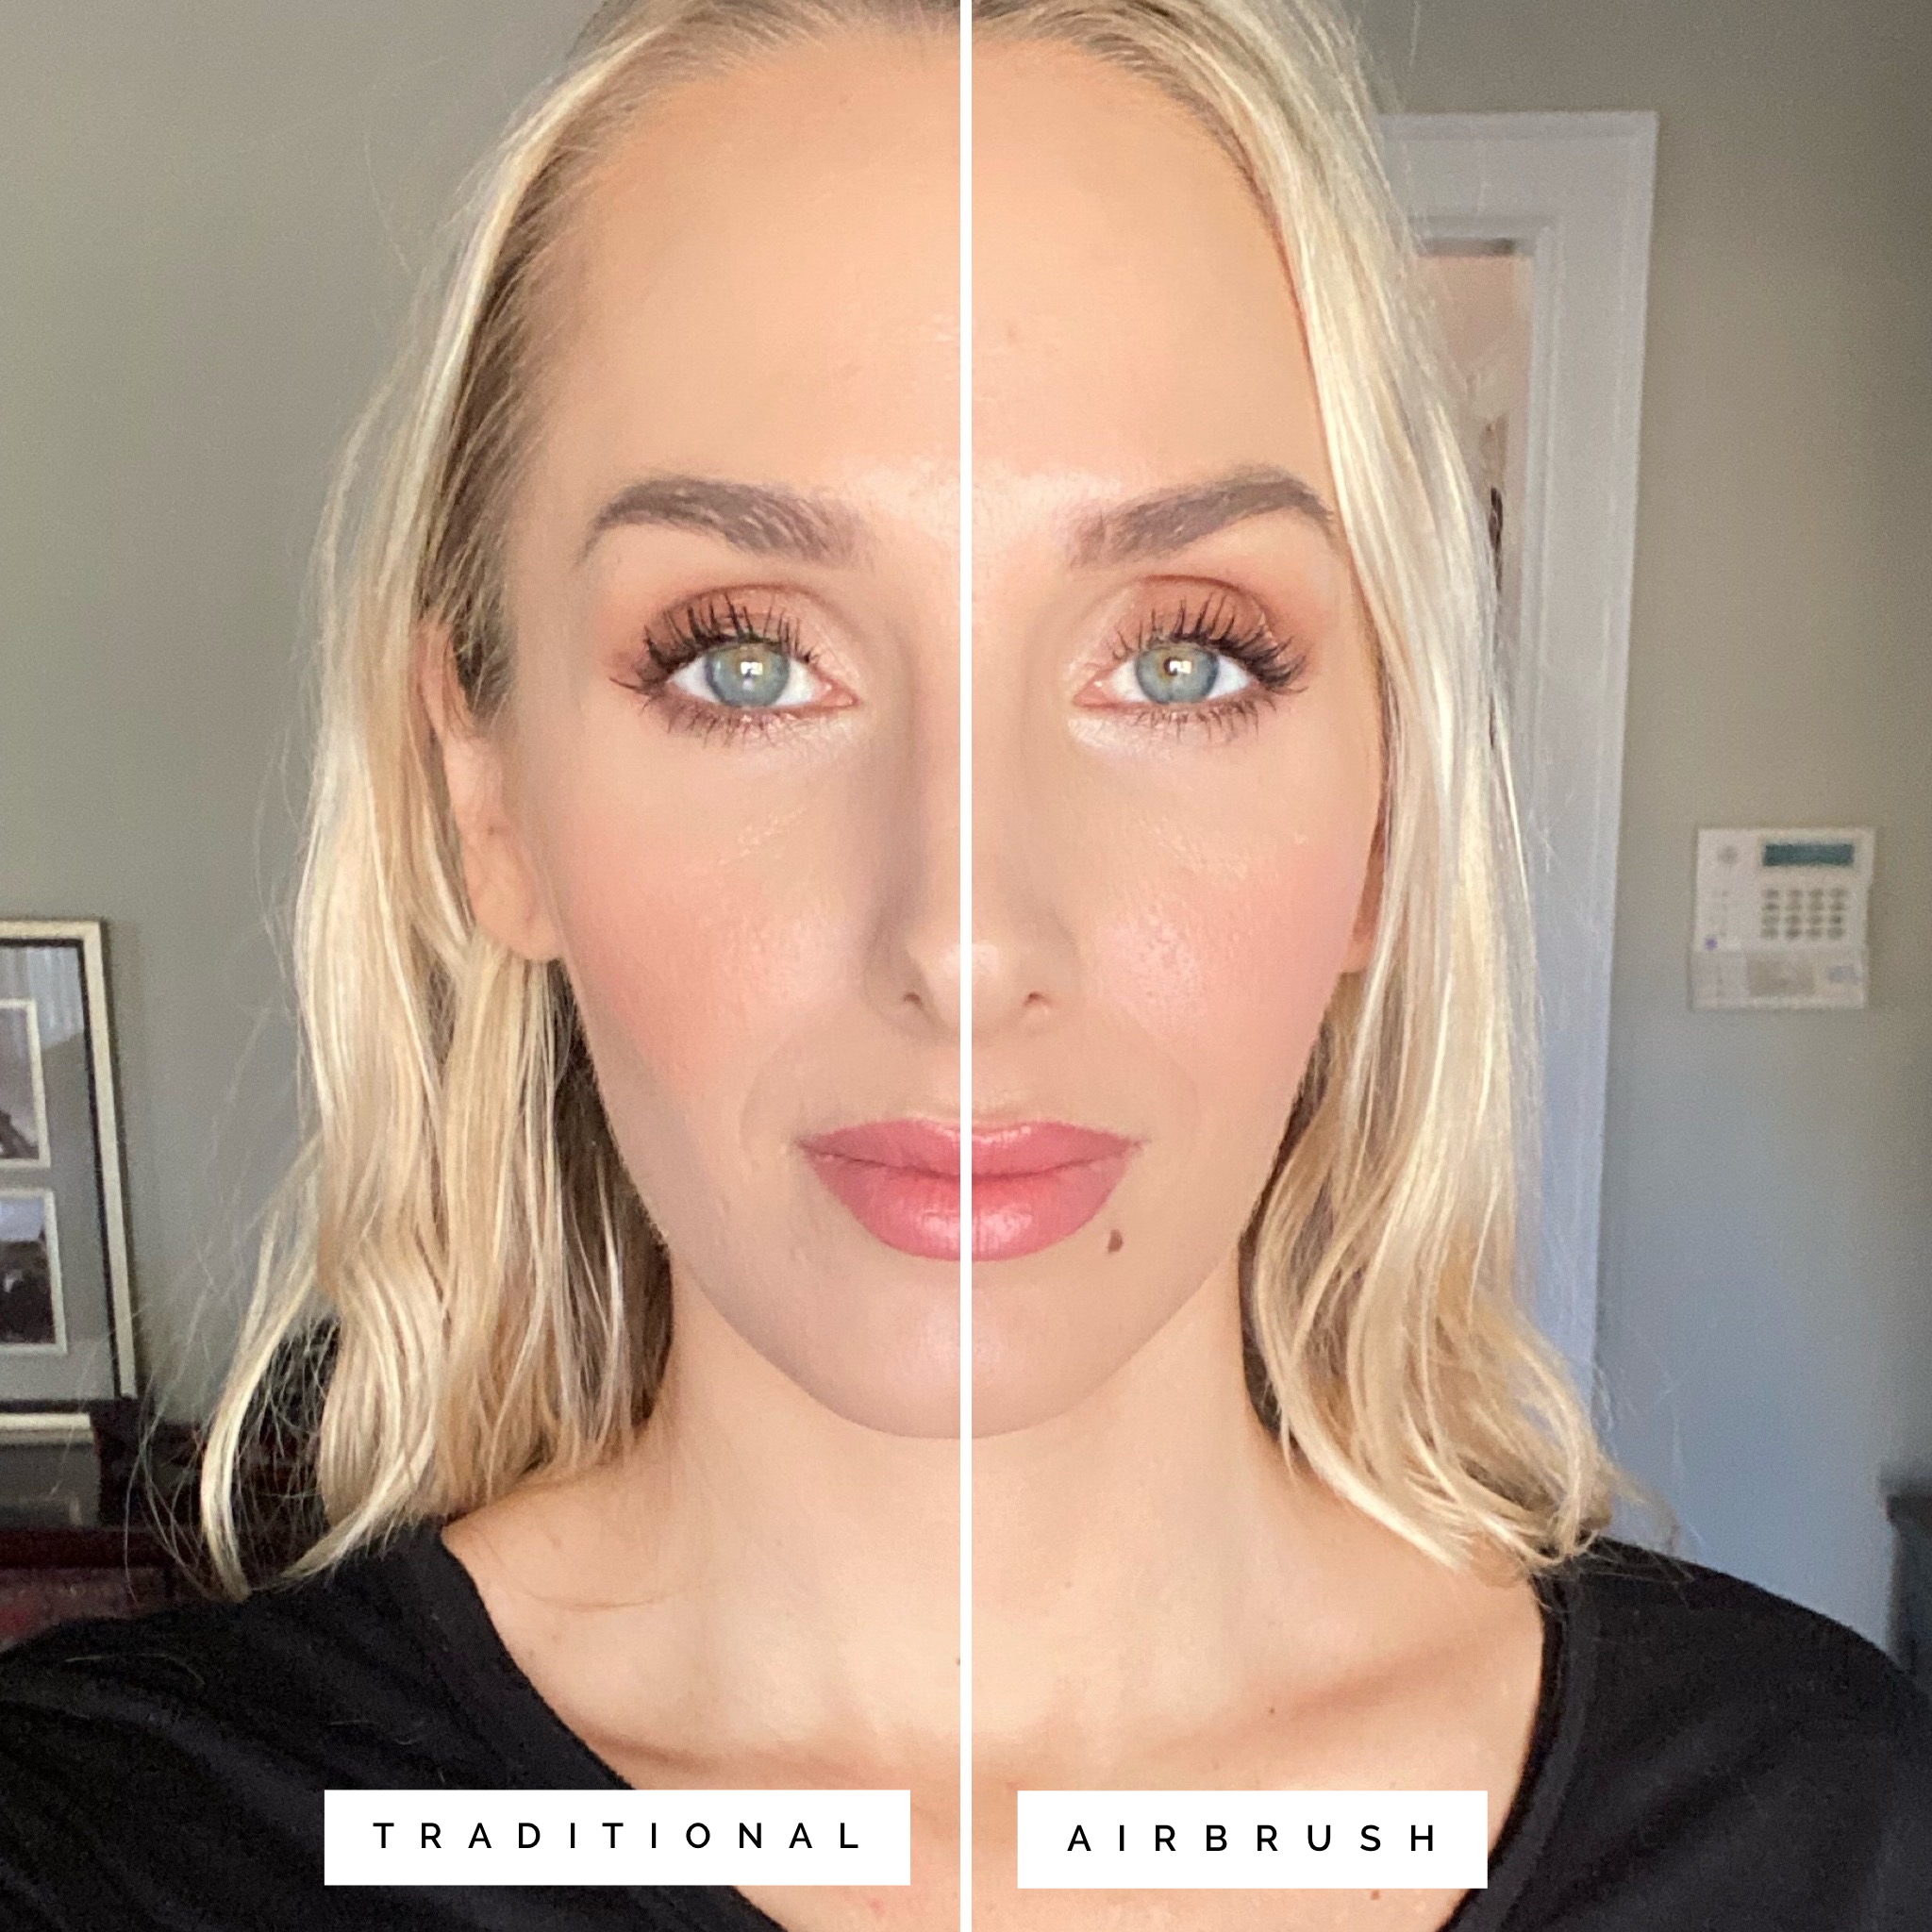 airbrush makeup vs traditional